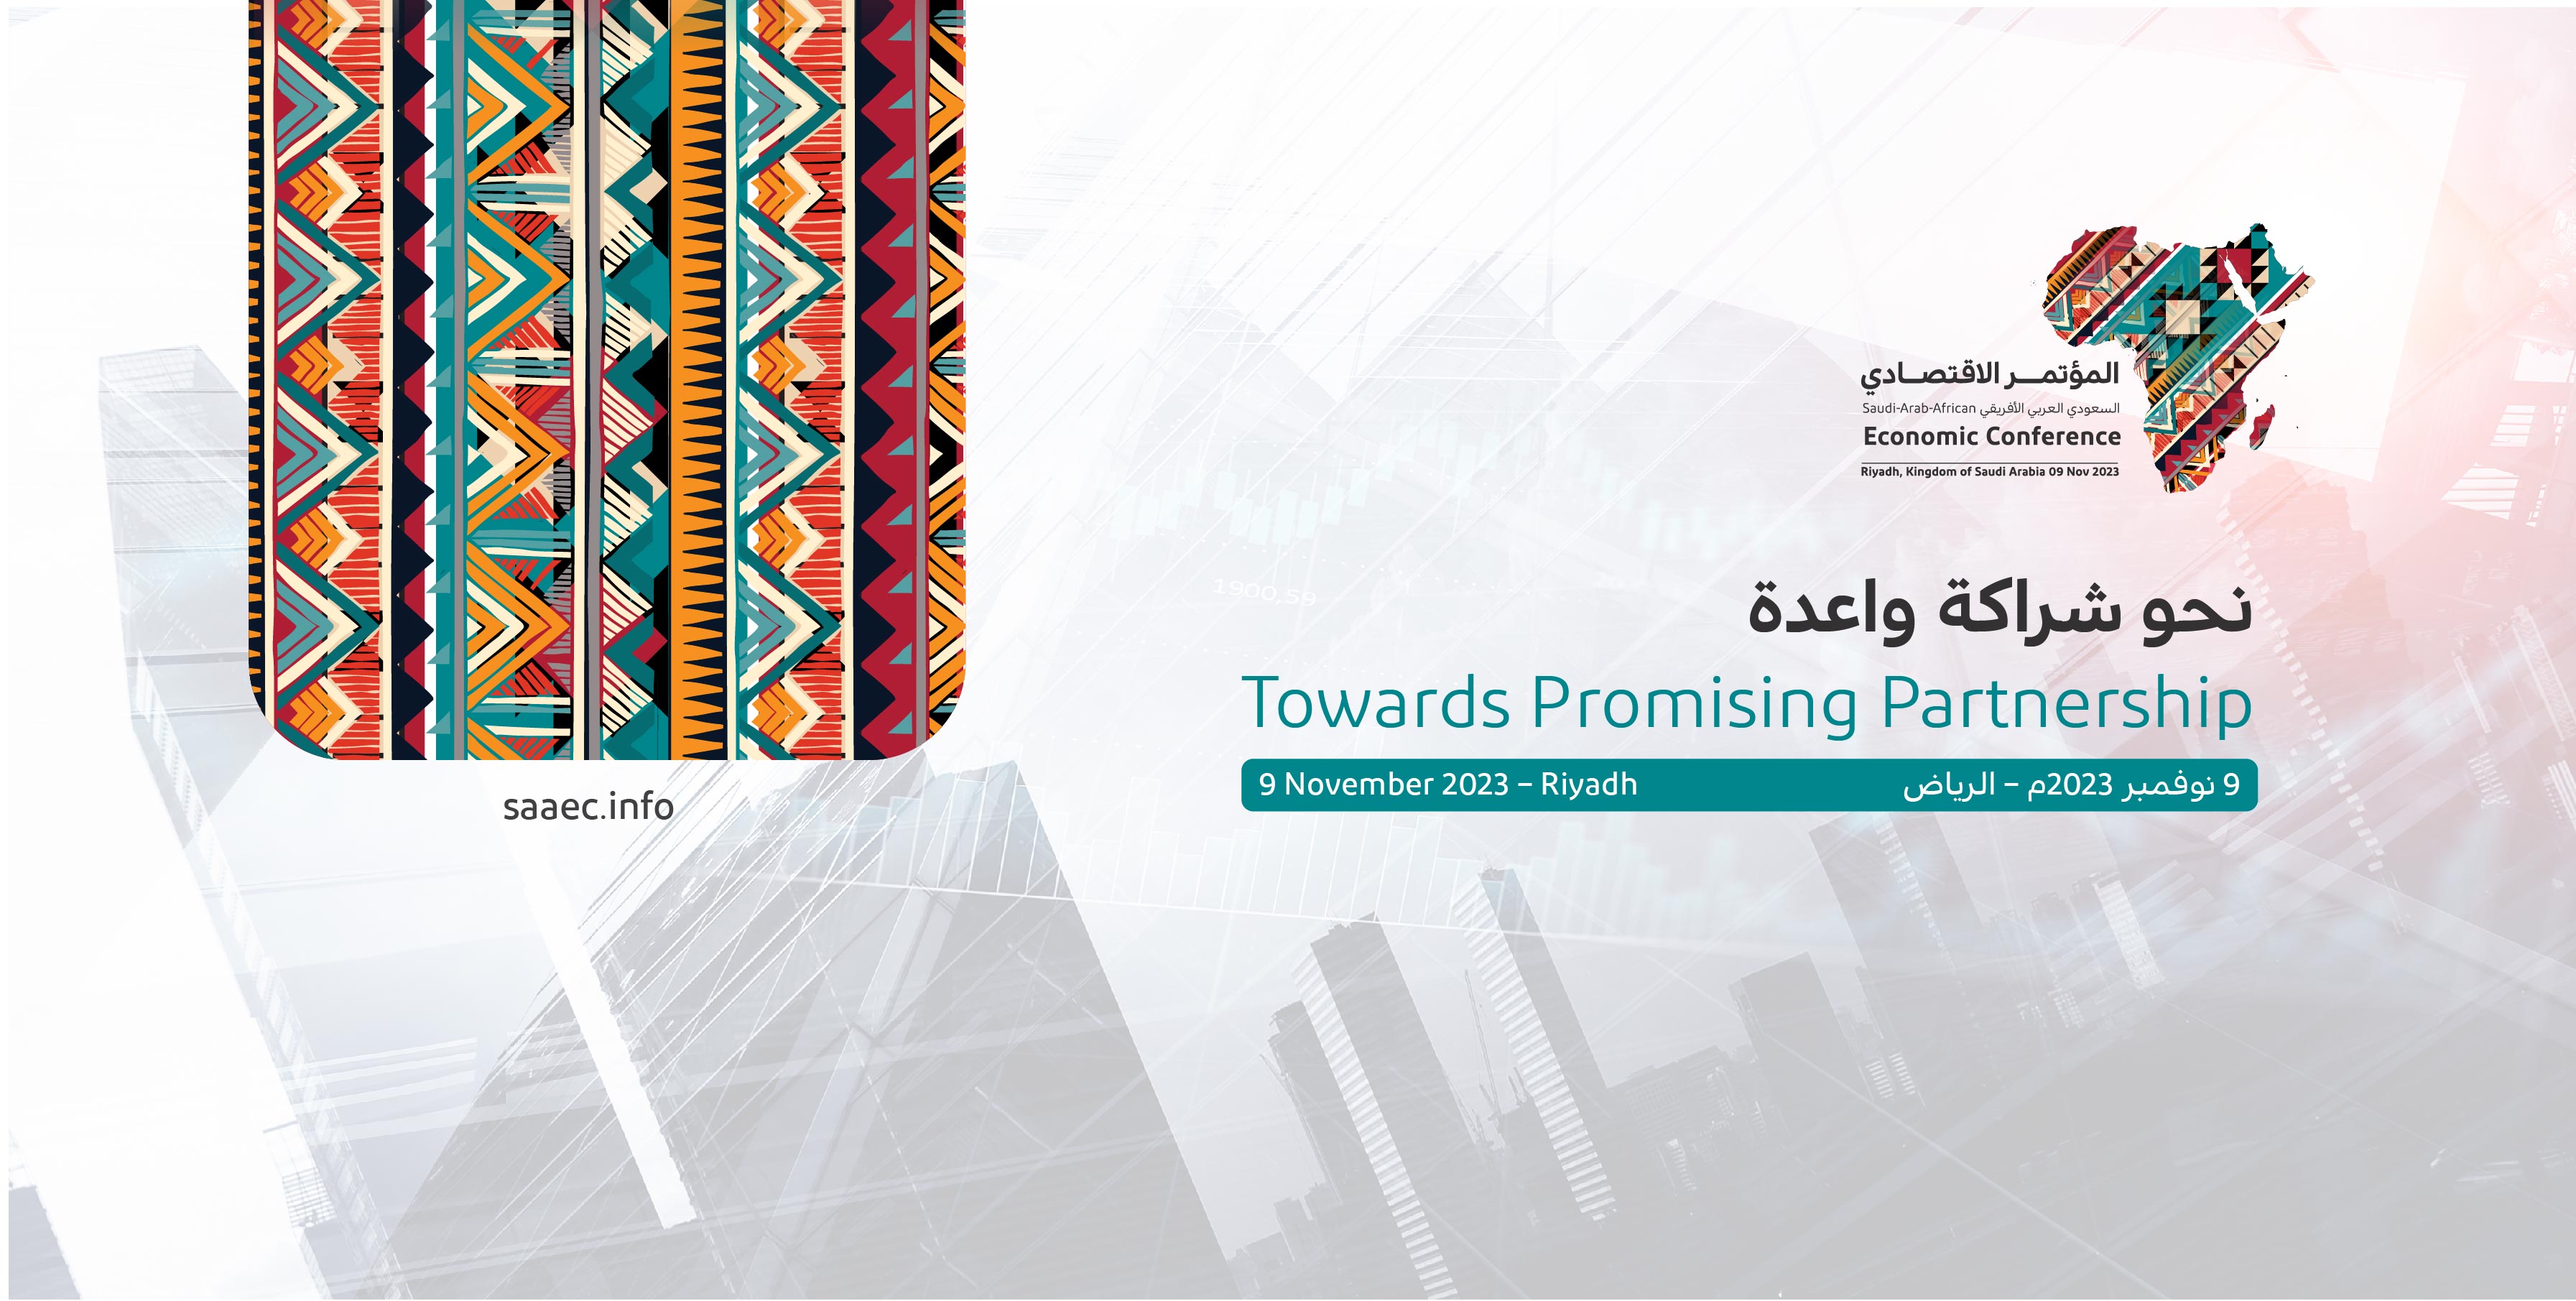 Saudi-Arab-African Economic Conference